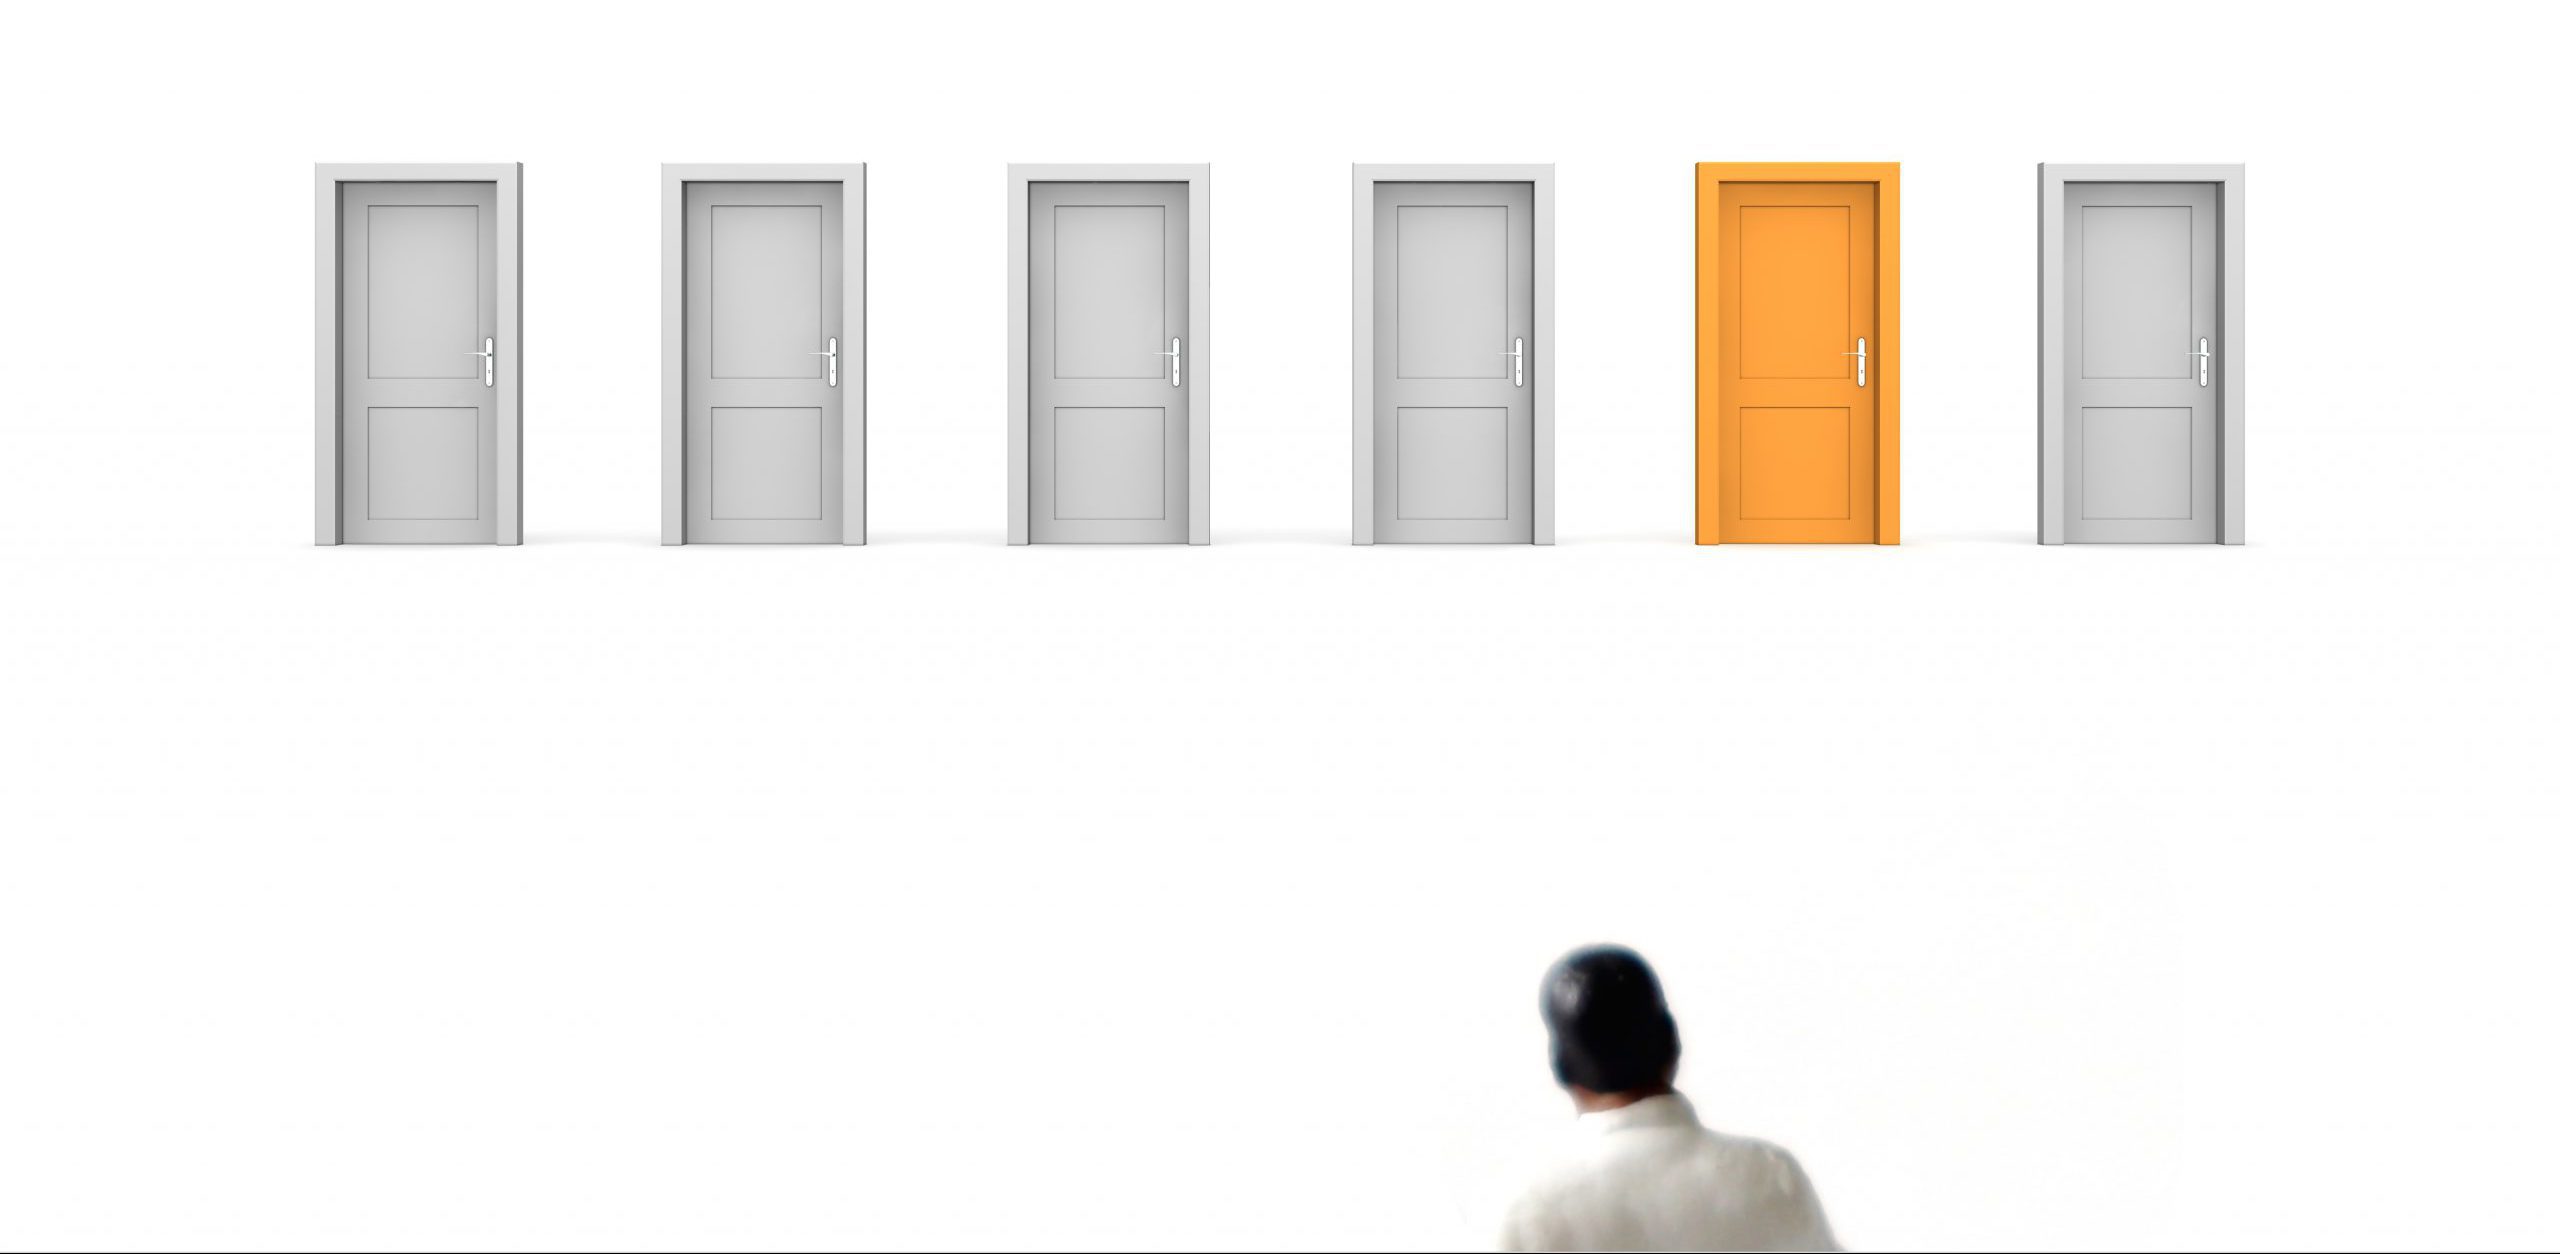 Man standing in front of closed doors